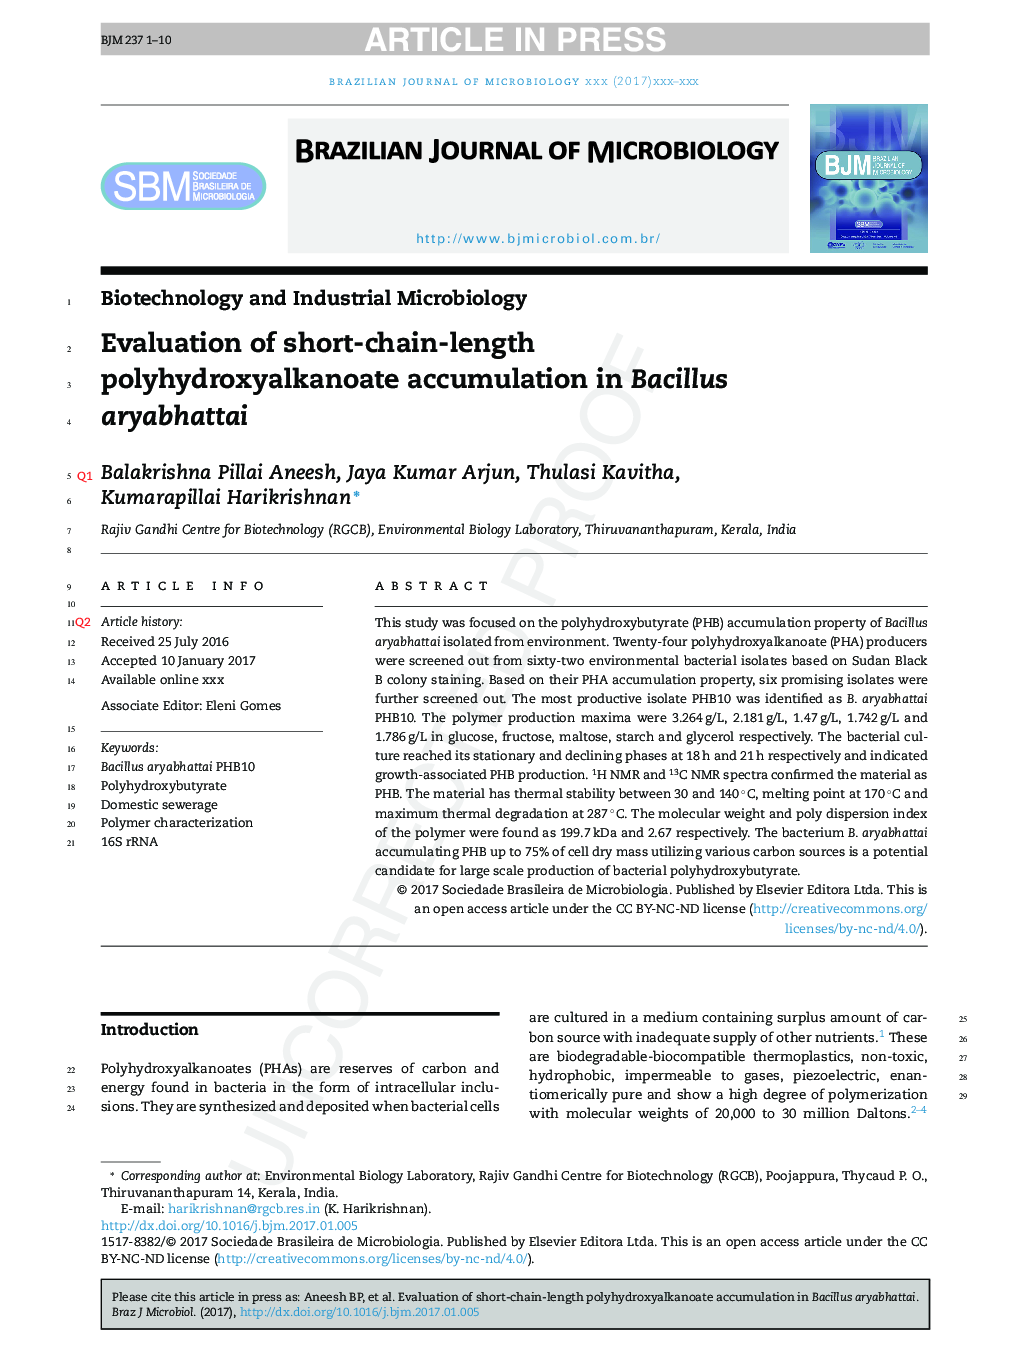 Evaluation of short-chain-length polyhydroxyalkanoate accumulation in Bacillus aryabhattai